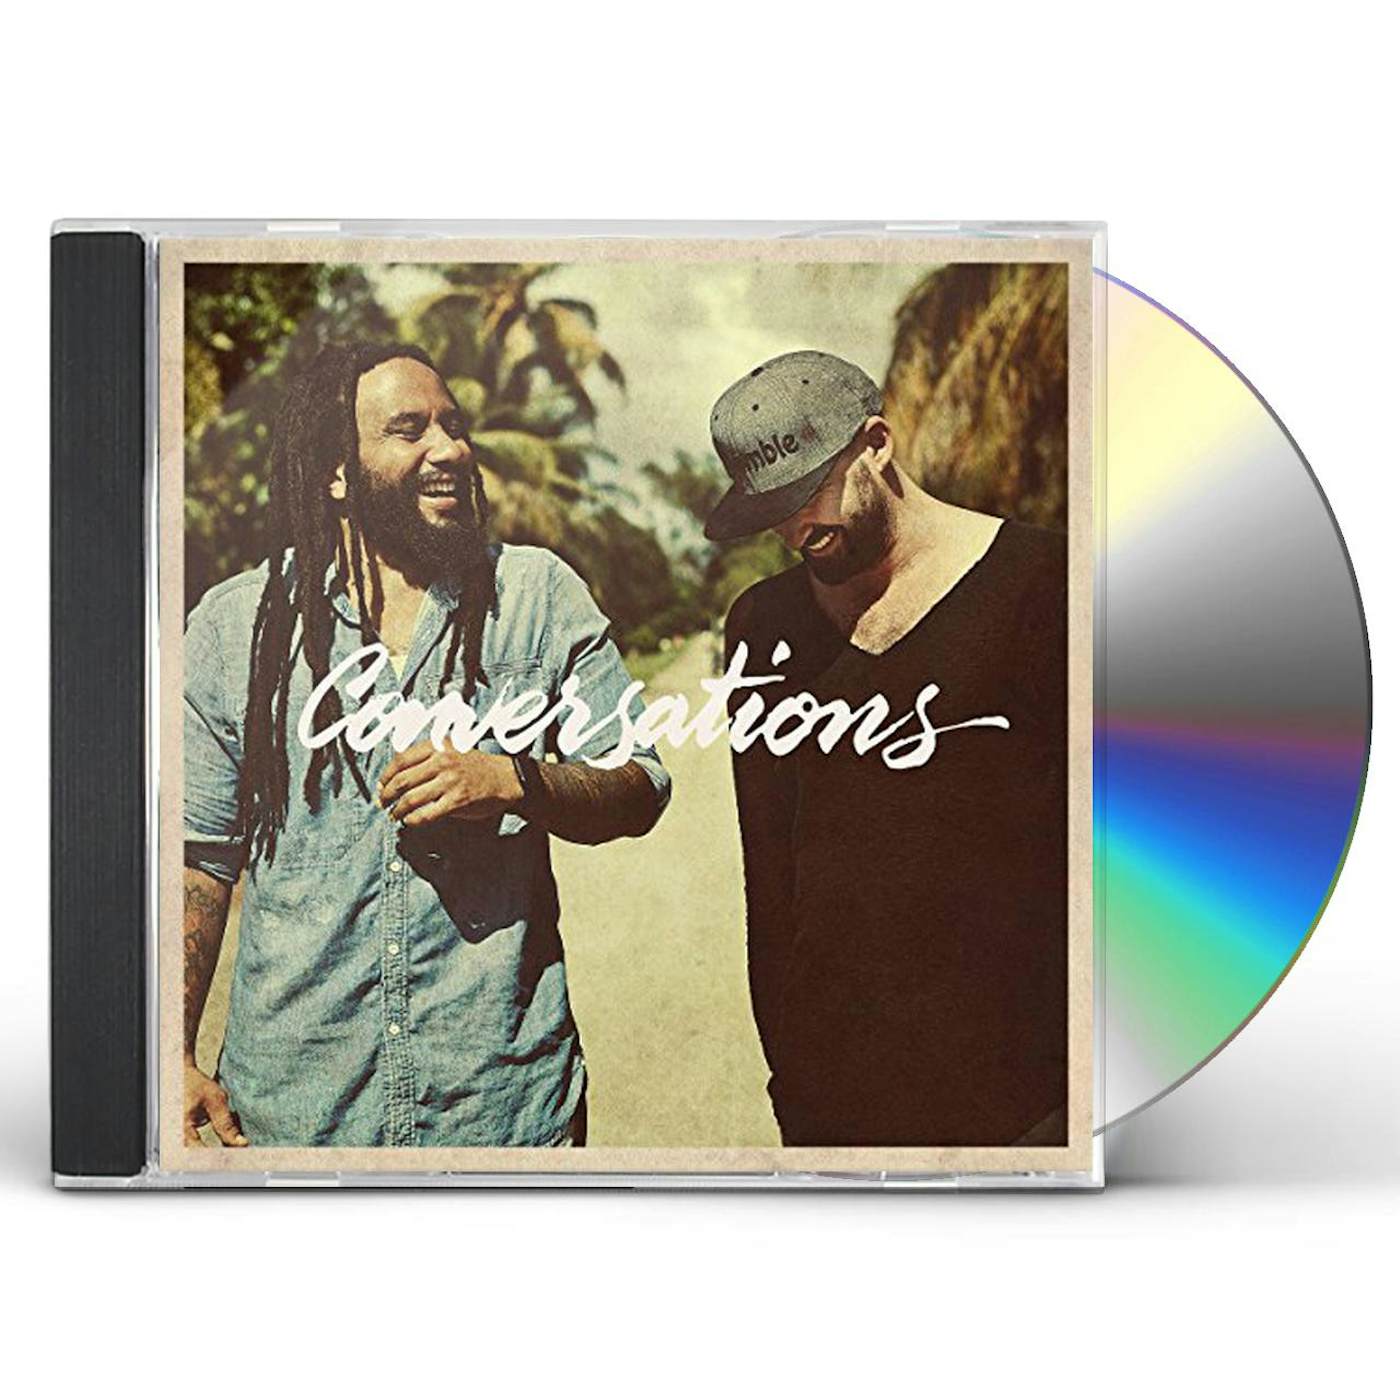 Gentleman & Ky-Mani Marley CONVERSATIONS CD